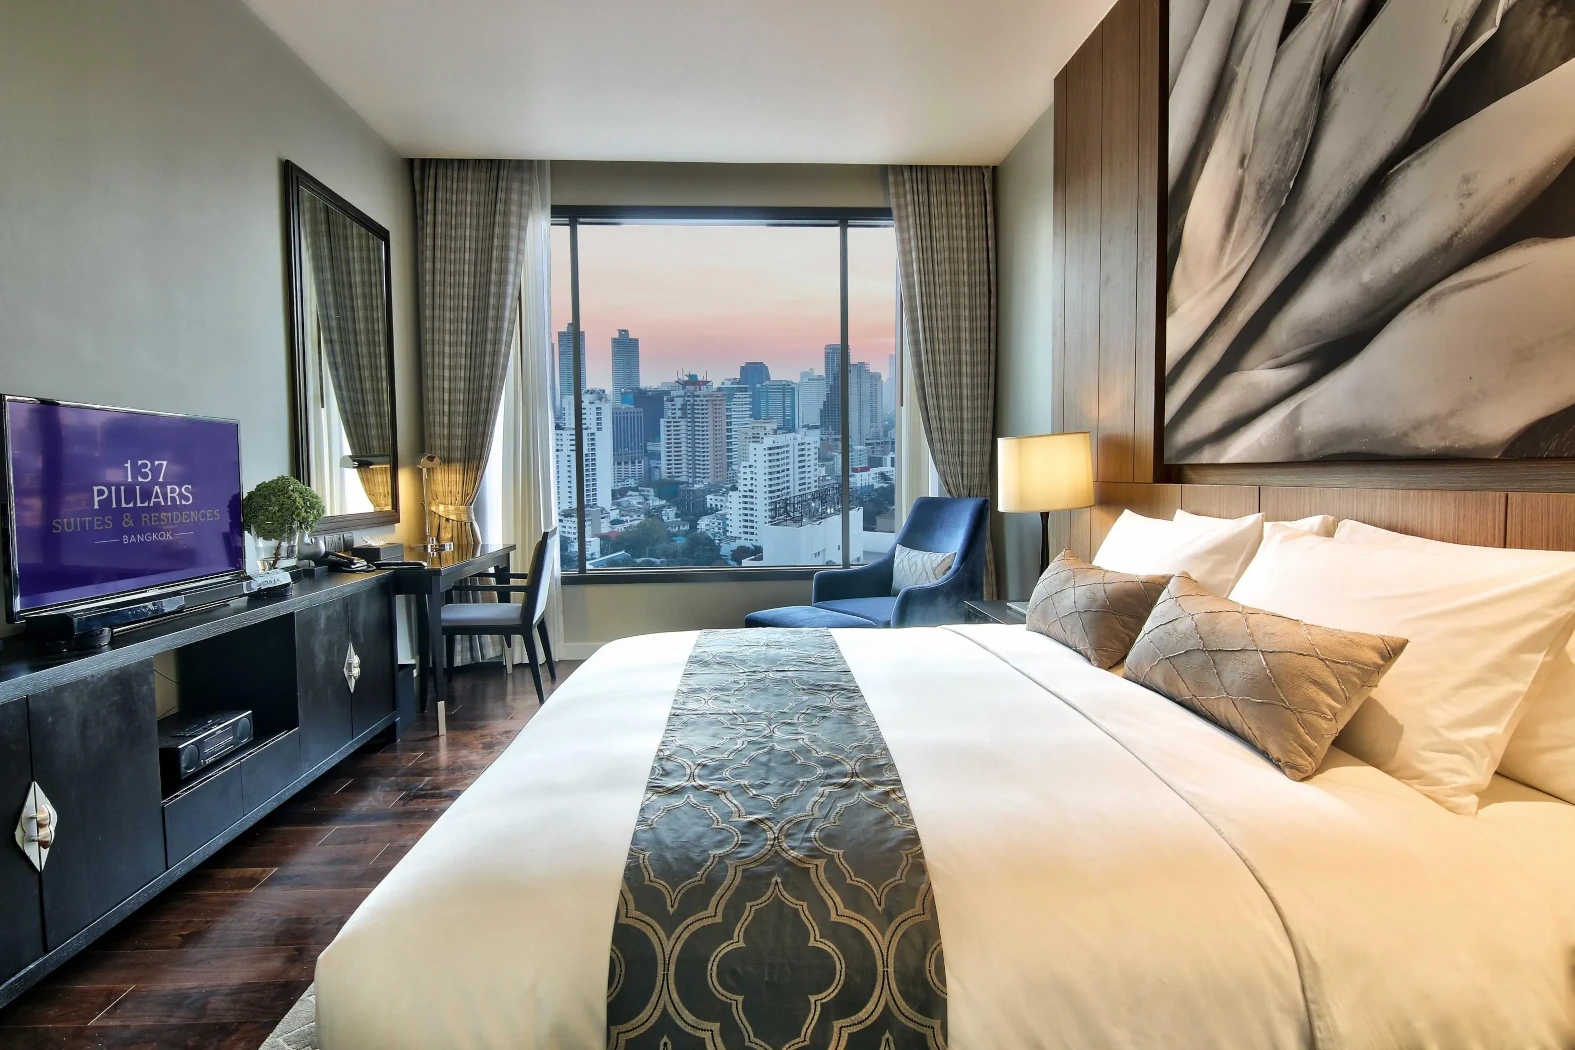 Beautiful Bedroom at 137 Pillars Suites & Residences, Bangkok.